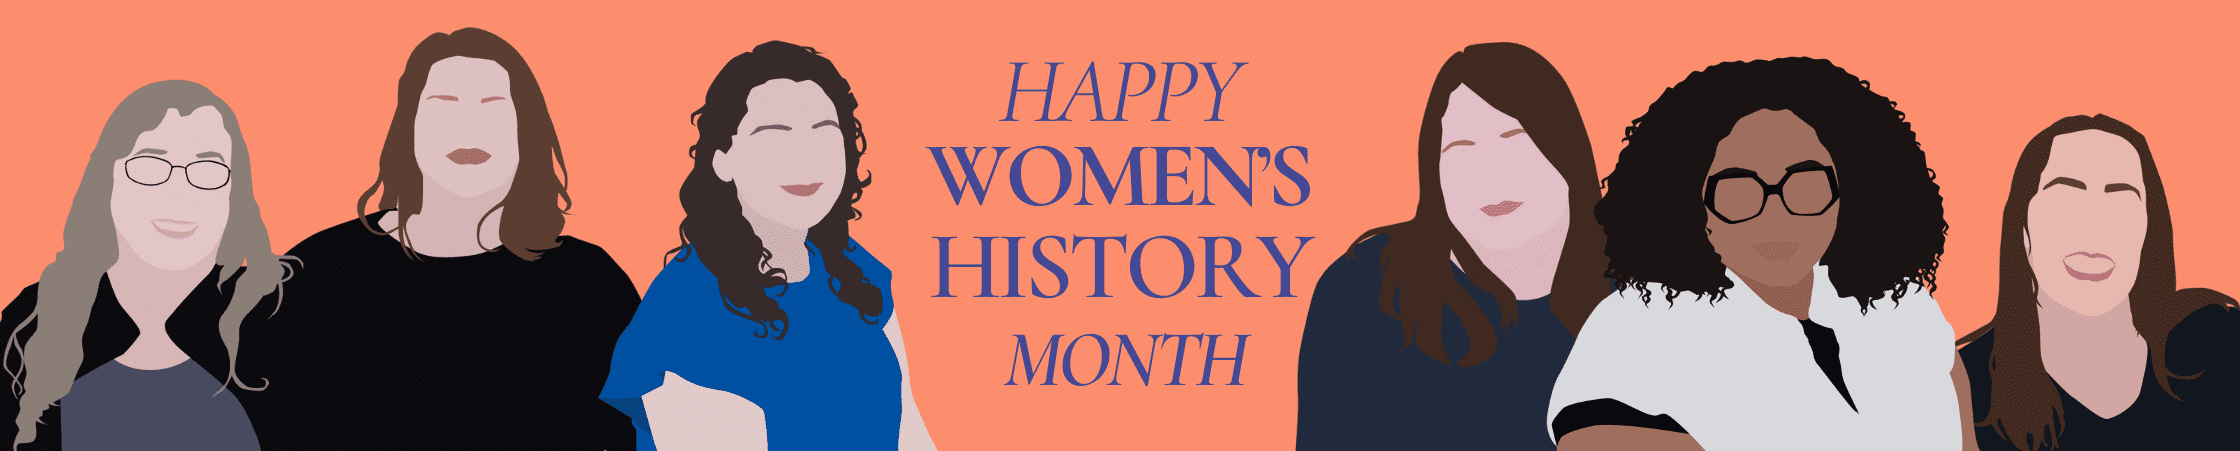 Happy Women's History Month.